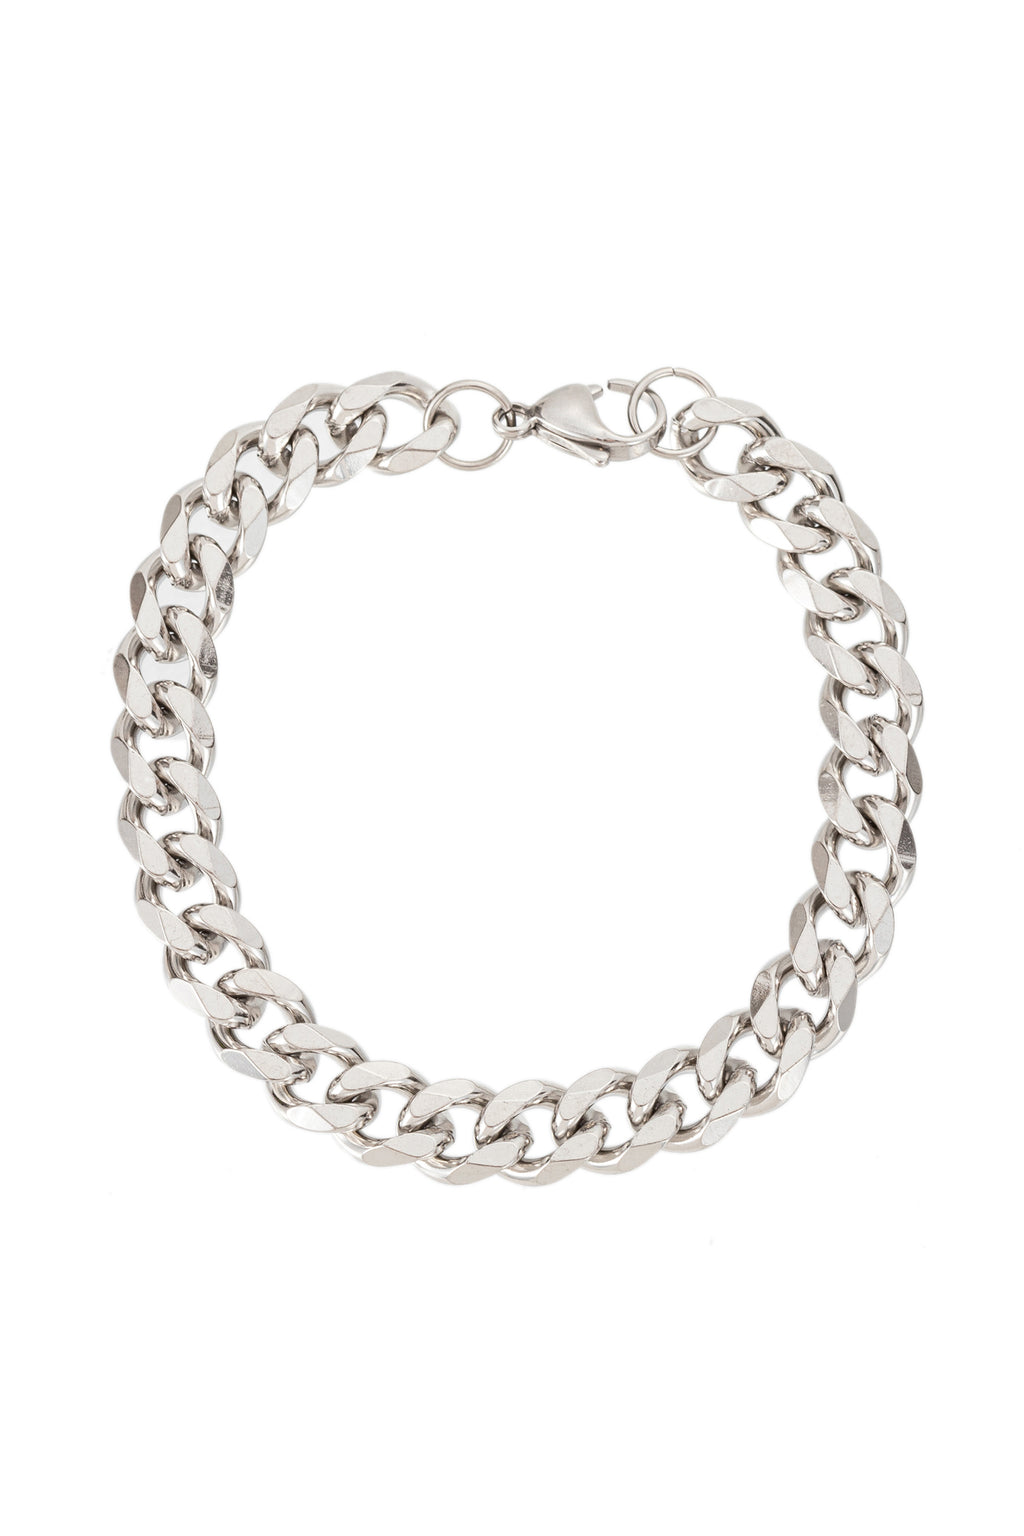 Silver titanium single strand bracelet.